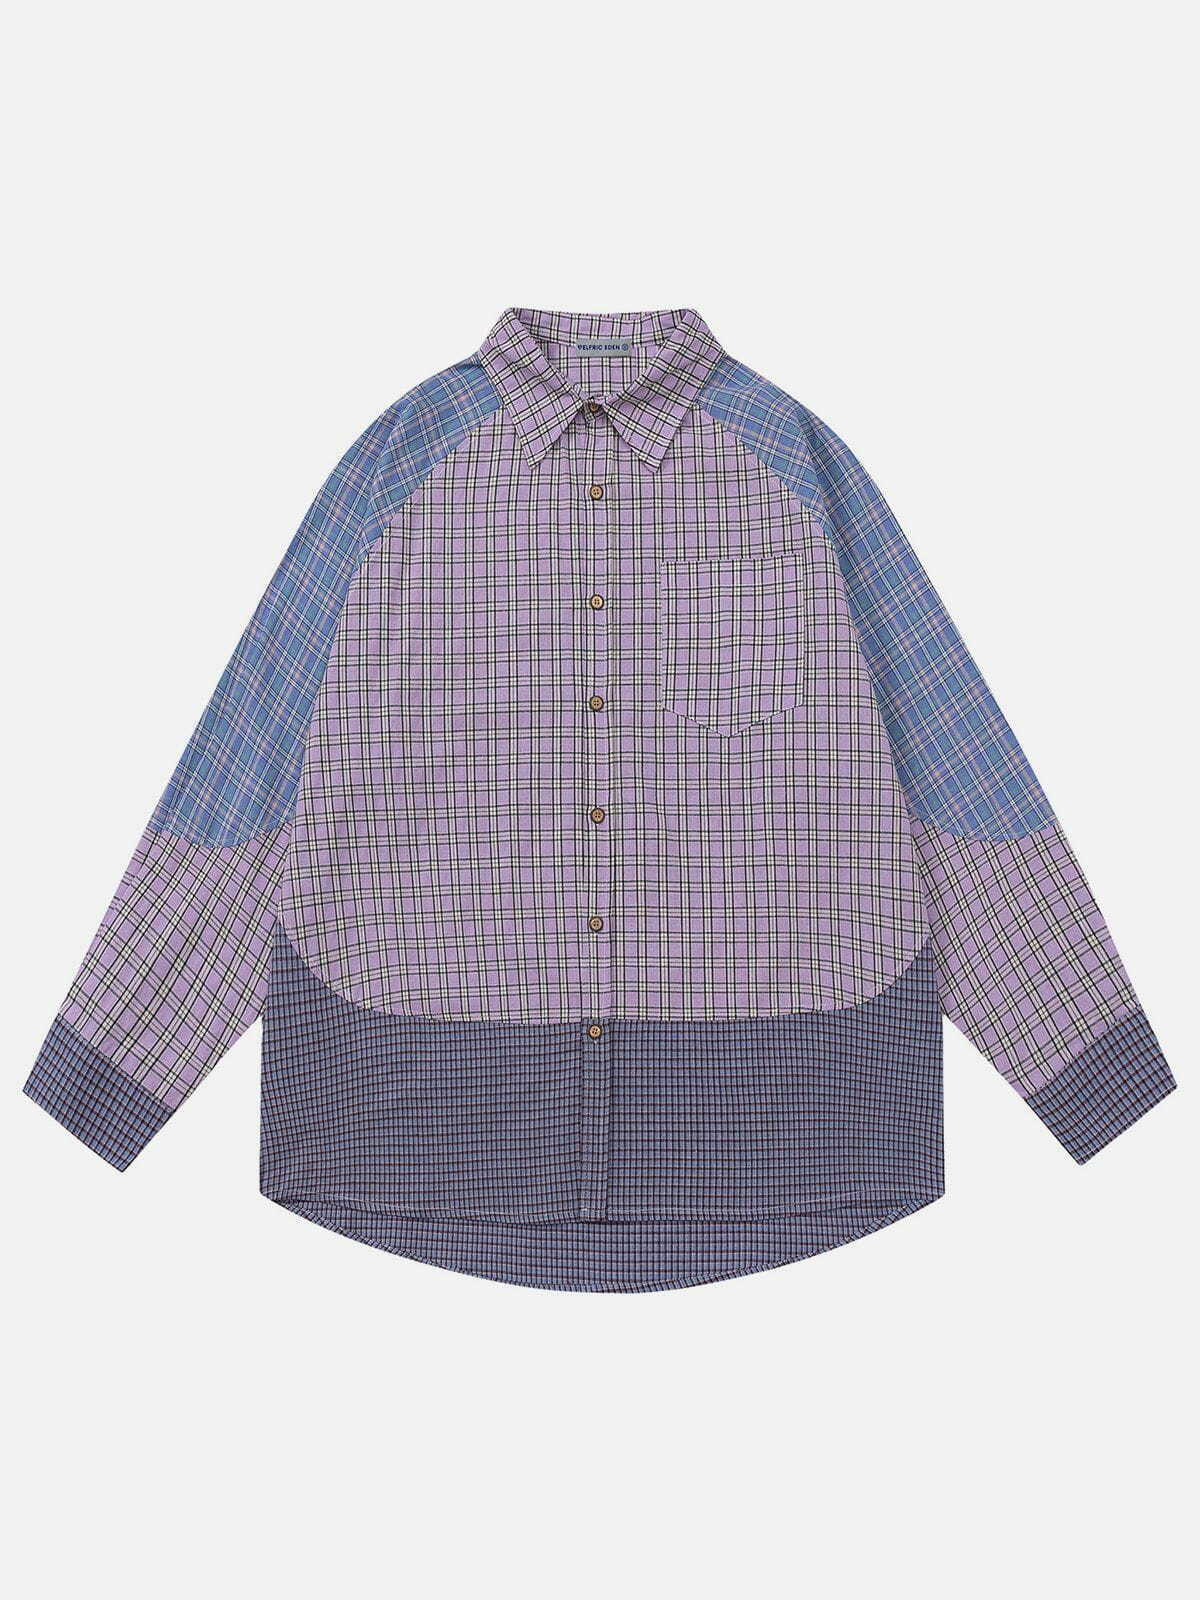 vibrant patchwork checked shirt urban fashion trend 6683